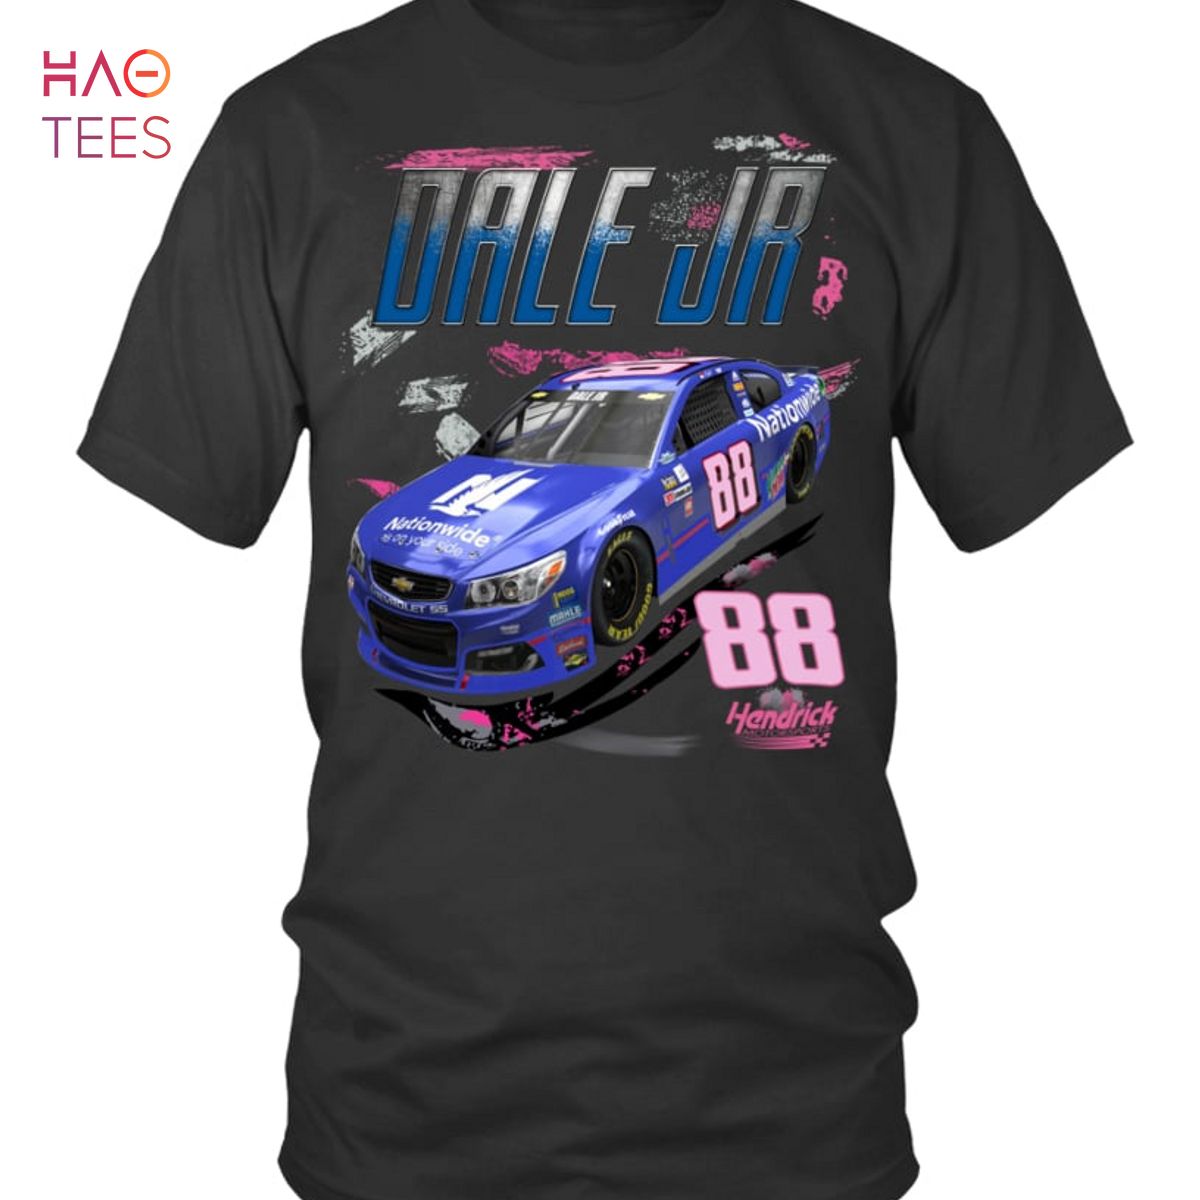 Dale Jr 88 Car Shirt Limited Edition